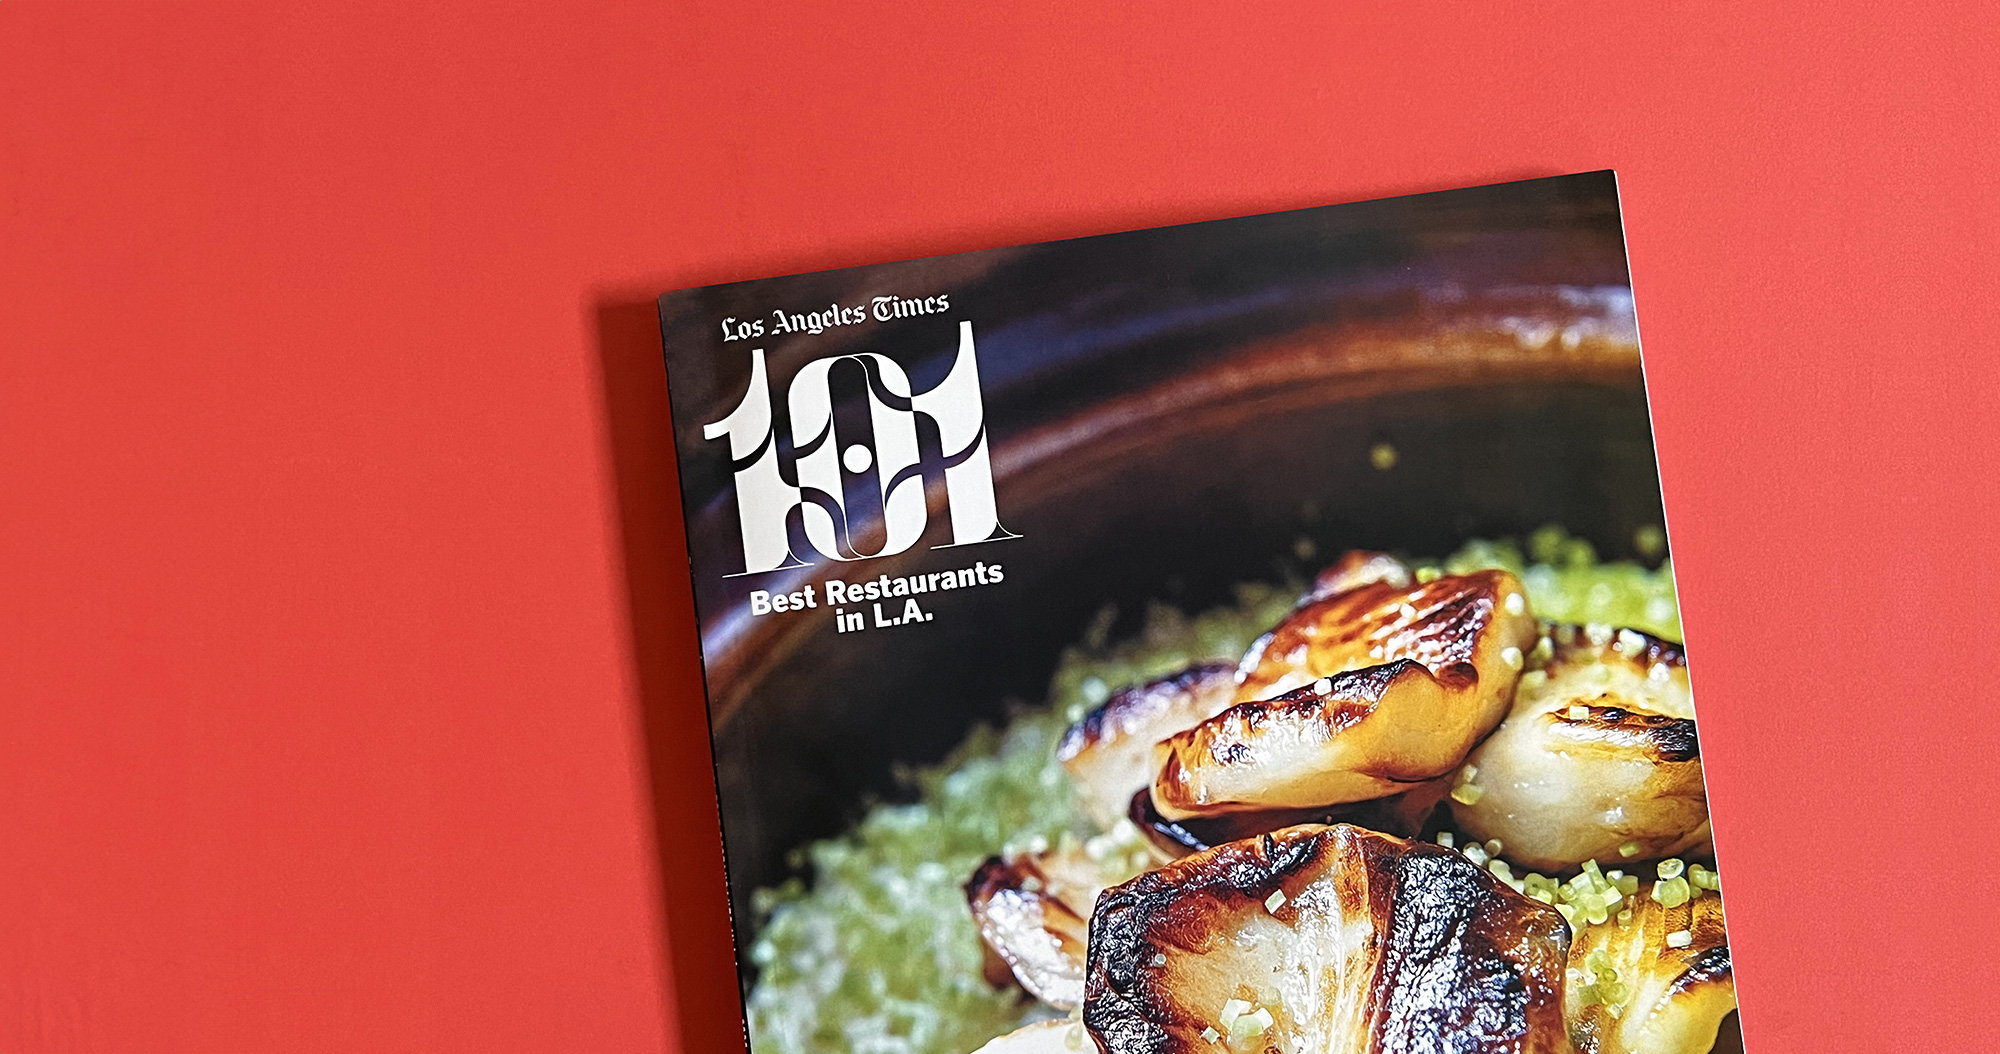 la times 101 best restaurants list magazine cover on red backdrop